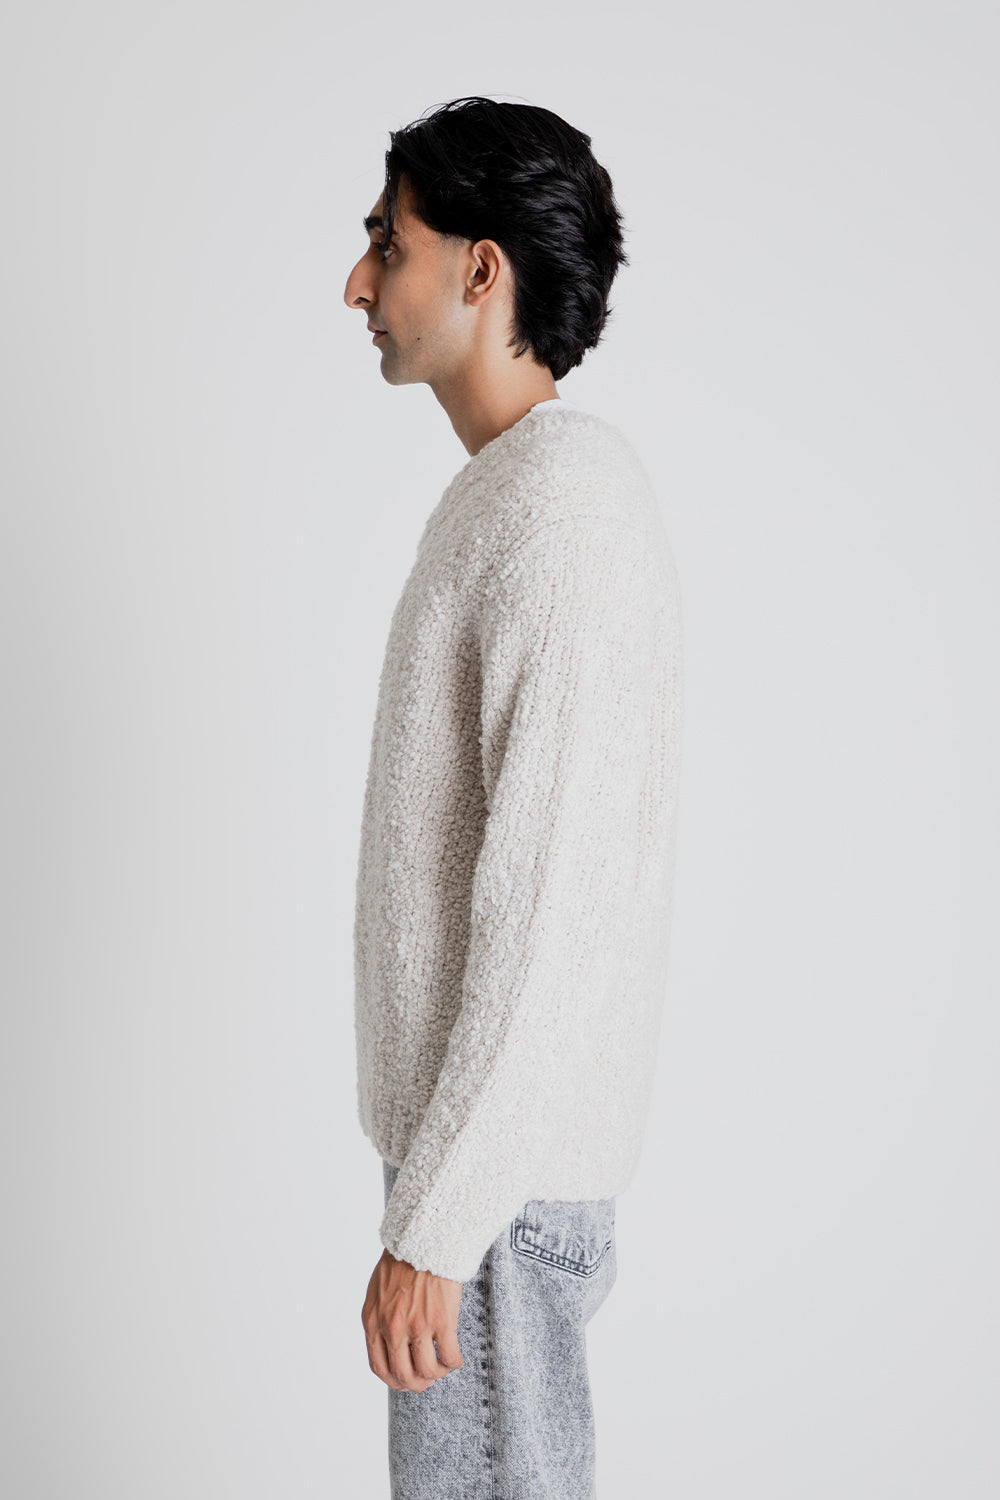 Sunflower Aske Sweater in Off White